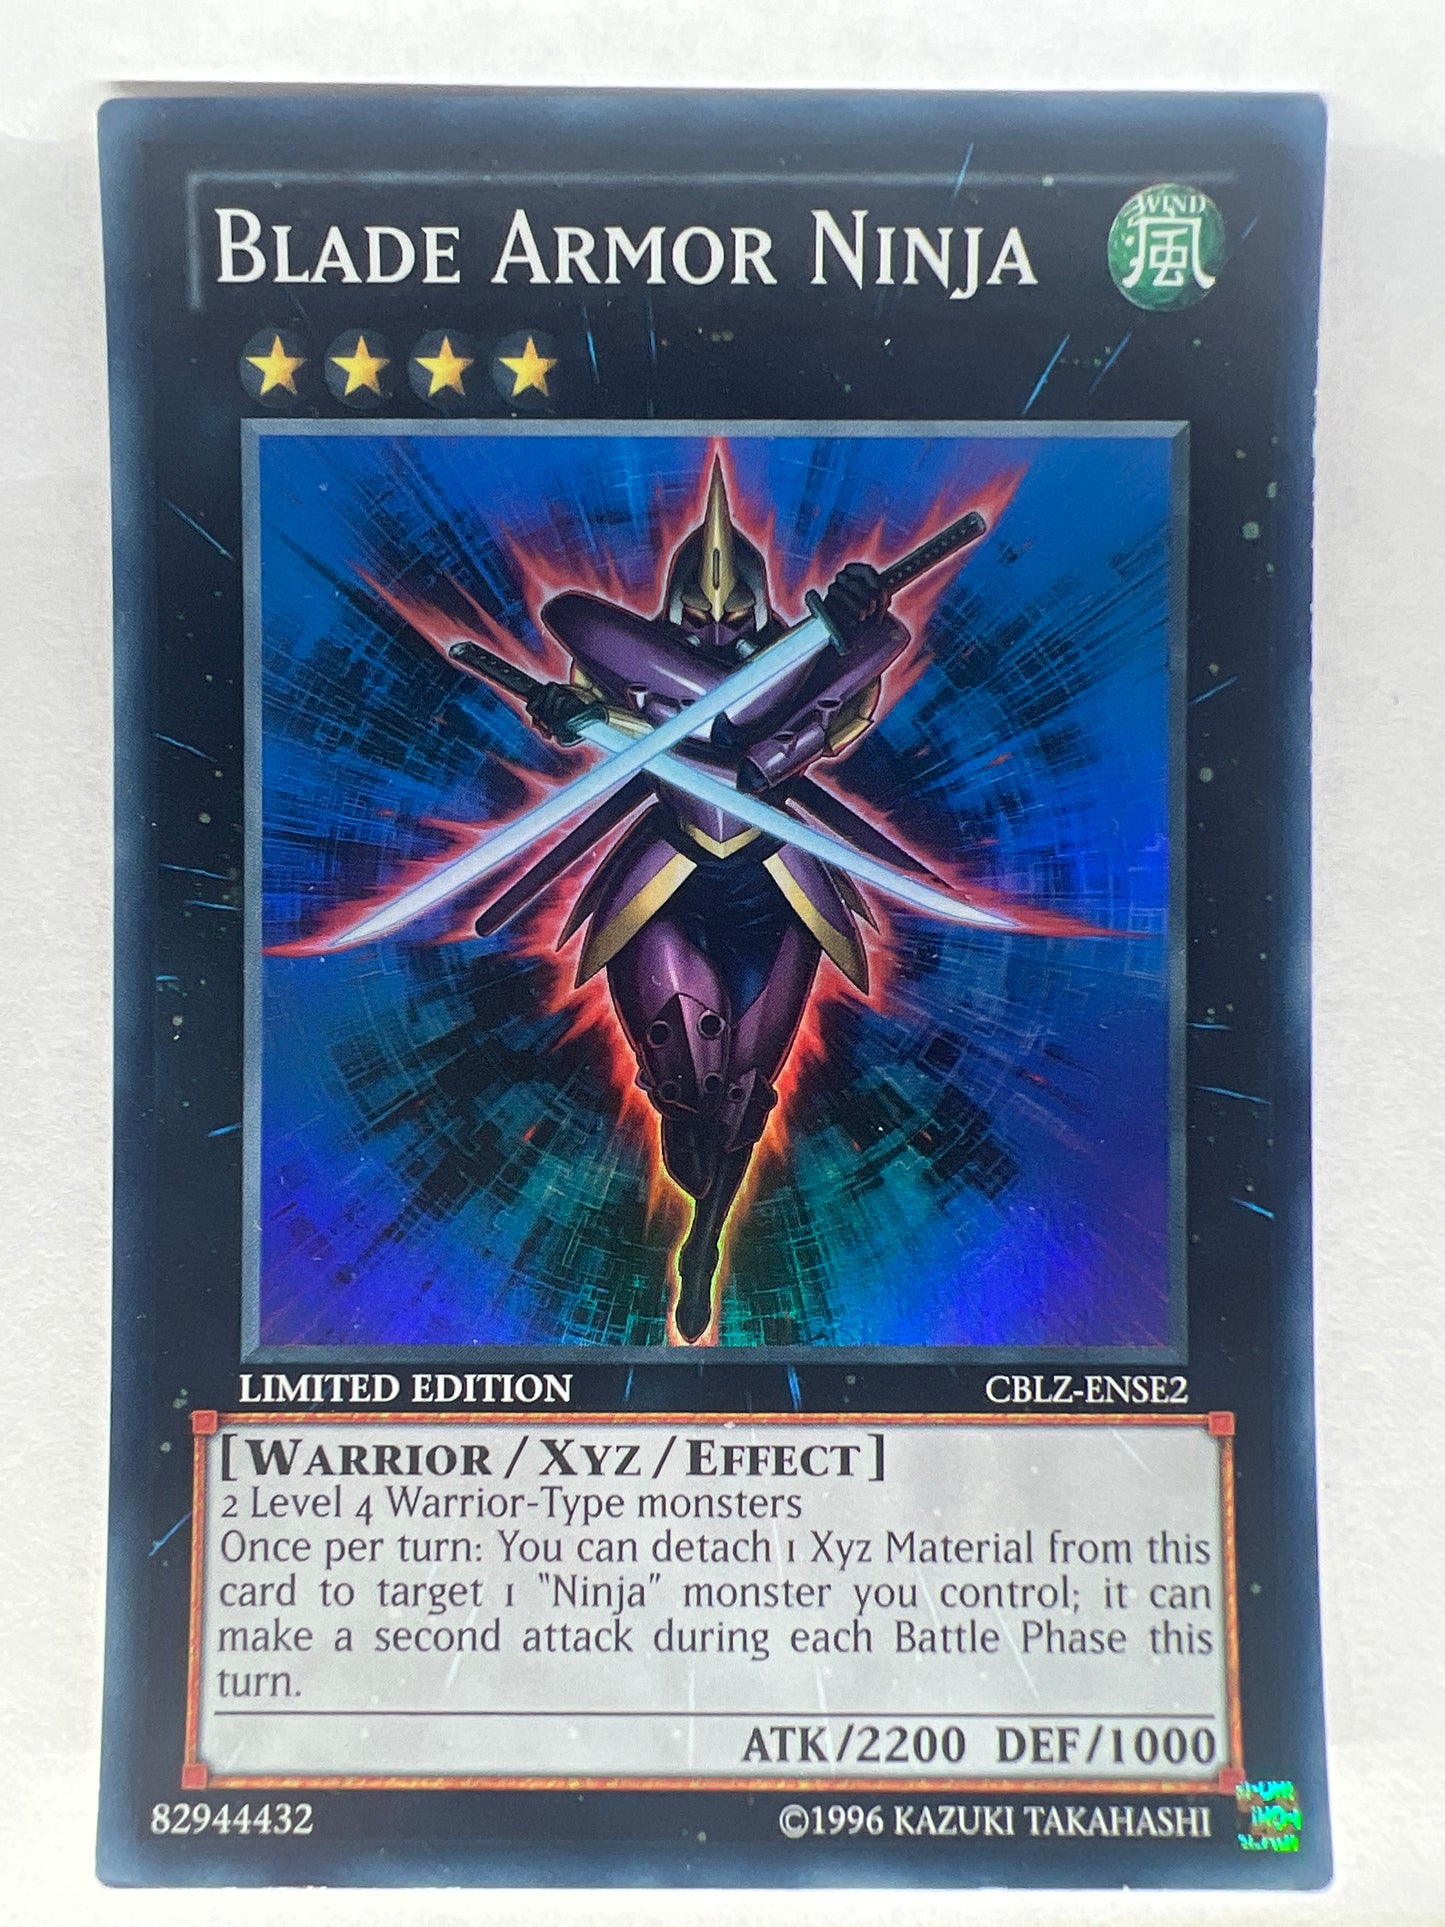 Blade Armor Ninja CBLZ-ENSE2